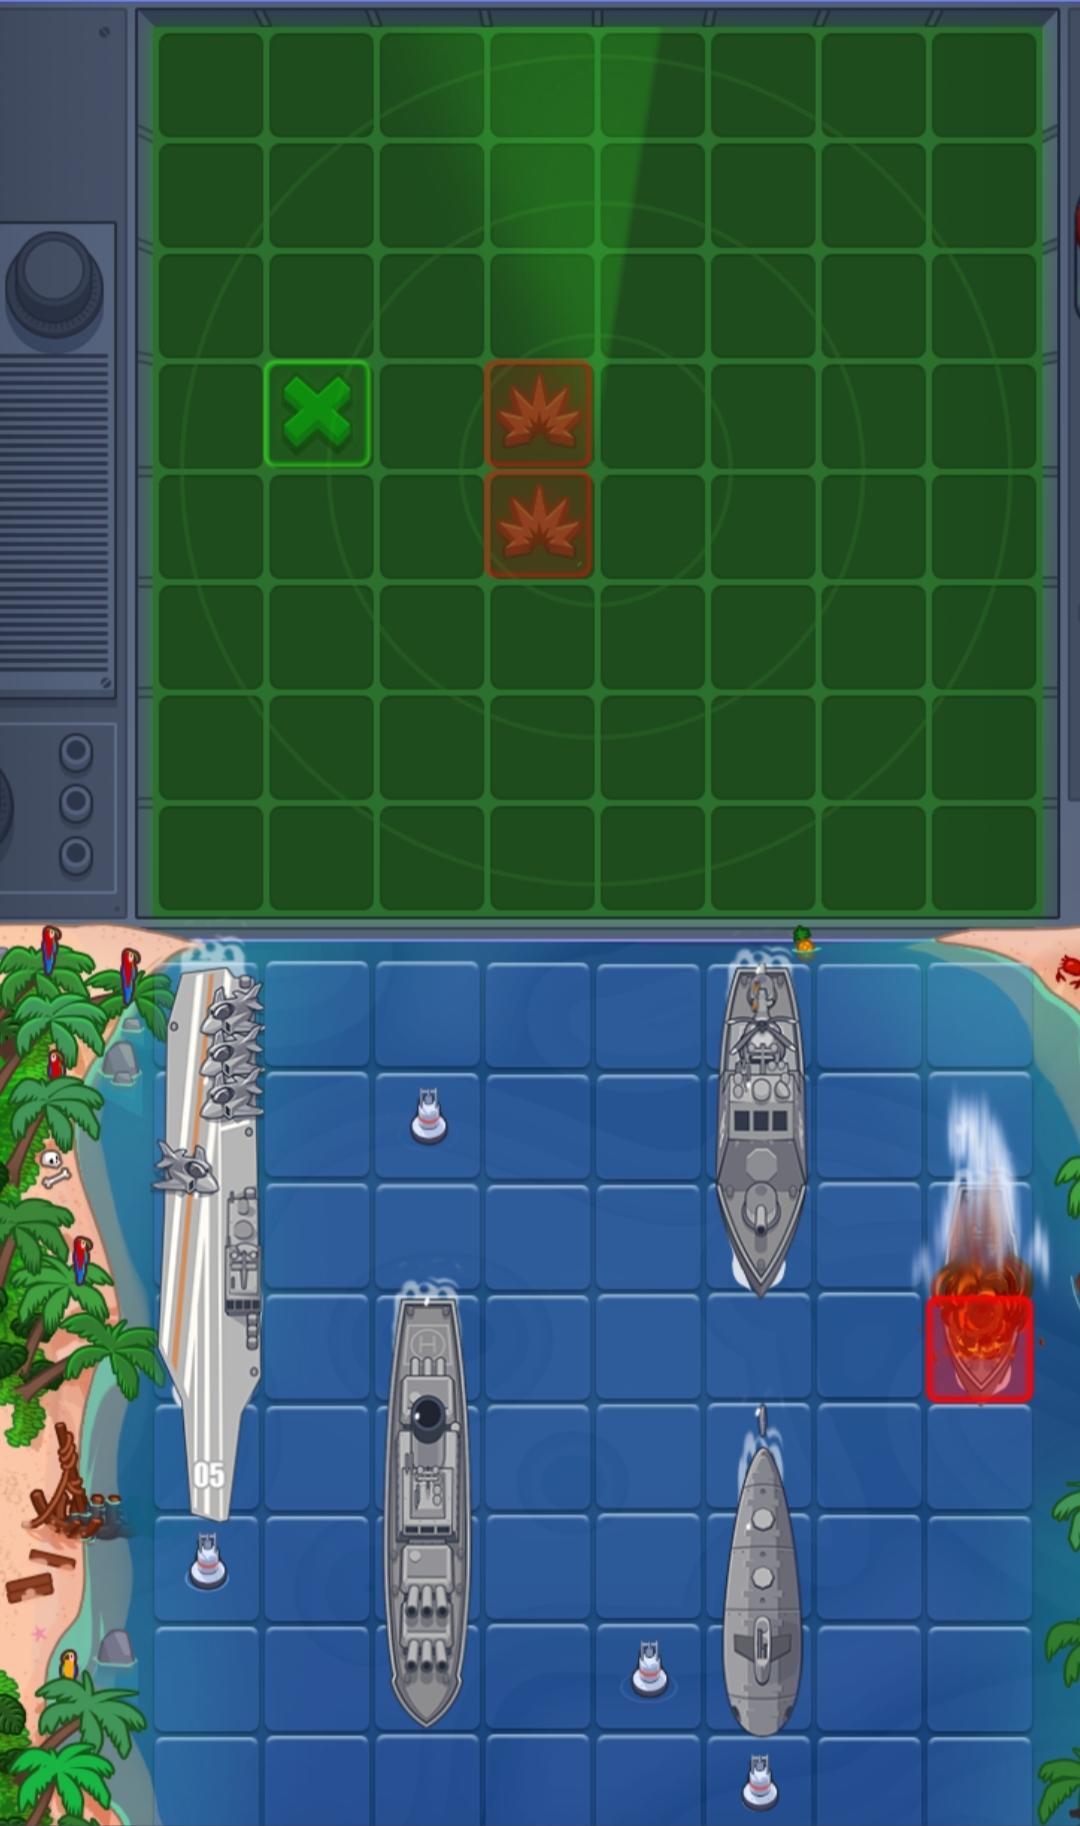 Battleship screenshot game